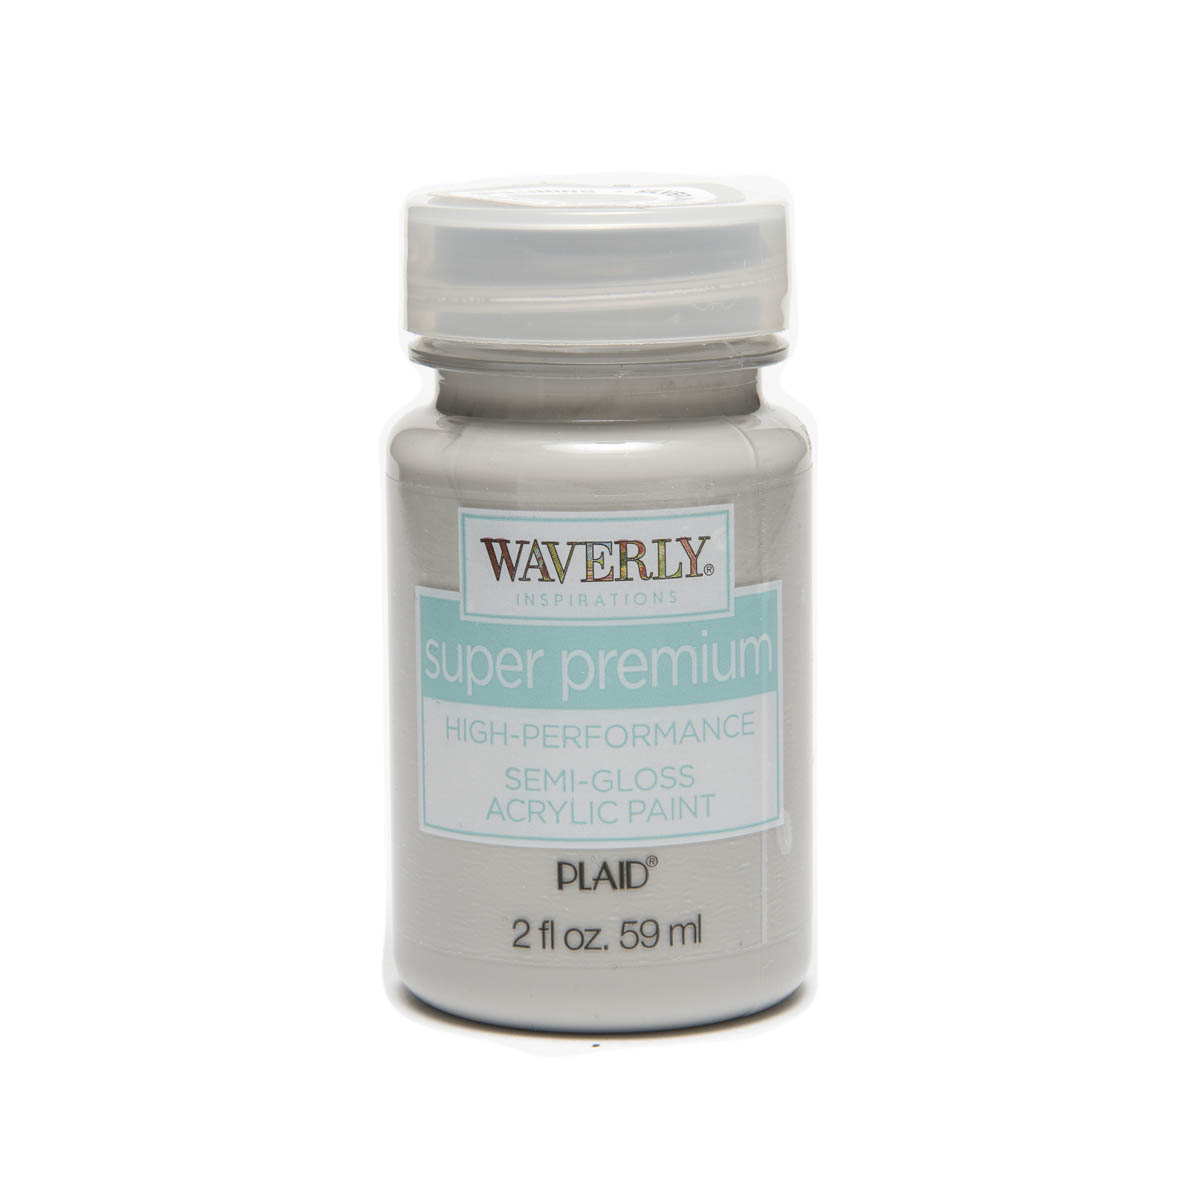 Waverly ® Inspirations Super Premium Semi-Gloss Acrylic Paint - Silver Lining, 2 oz. - 60657E